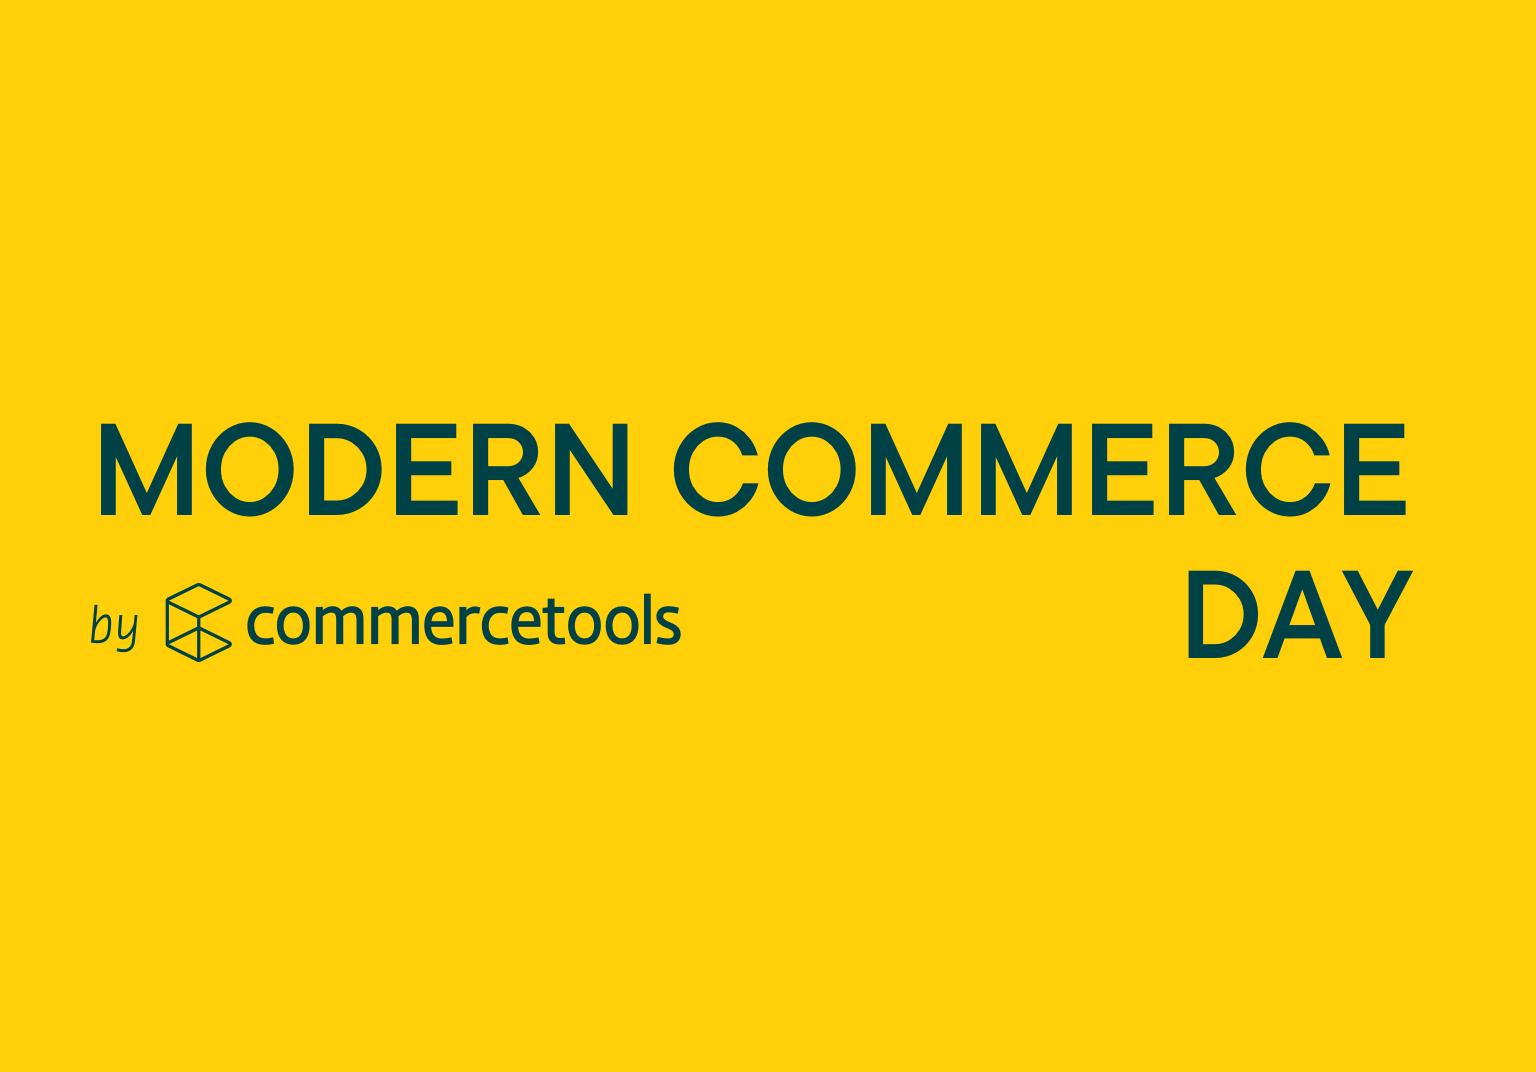 Modern commerce day